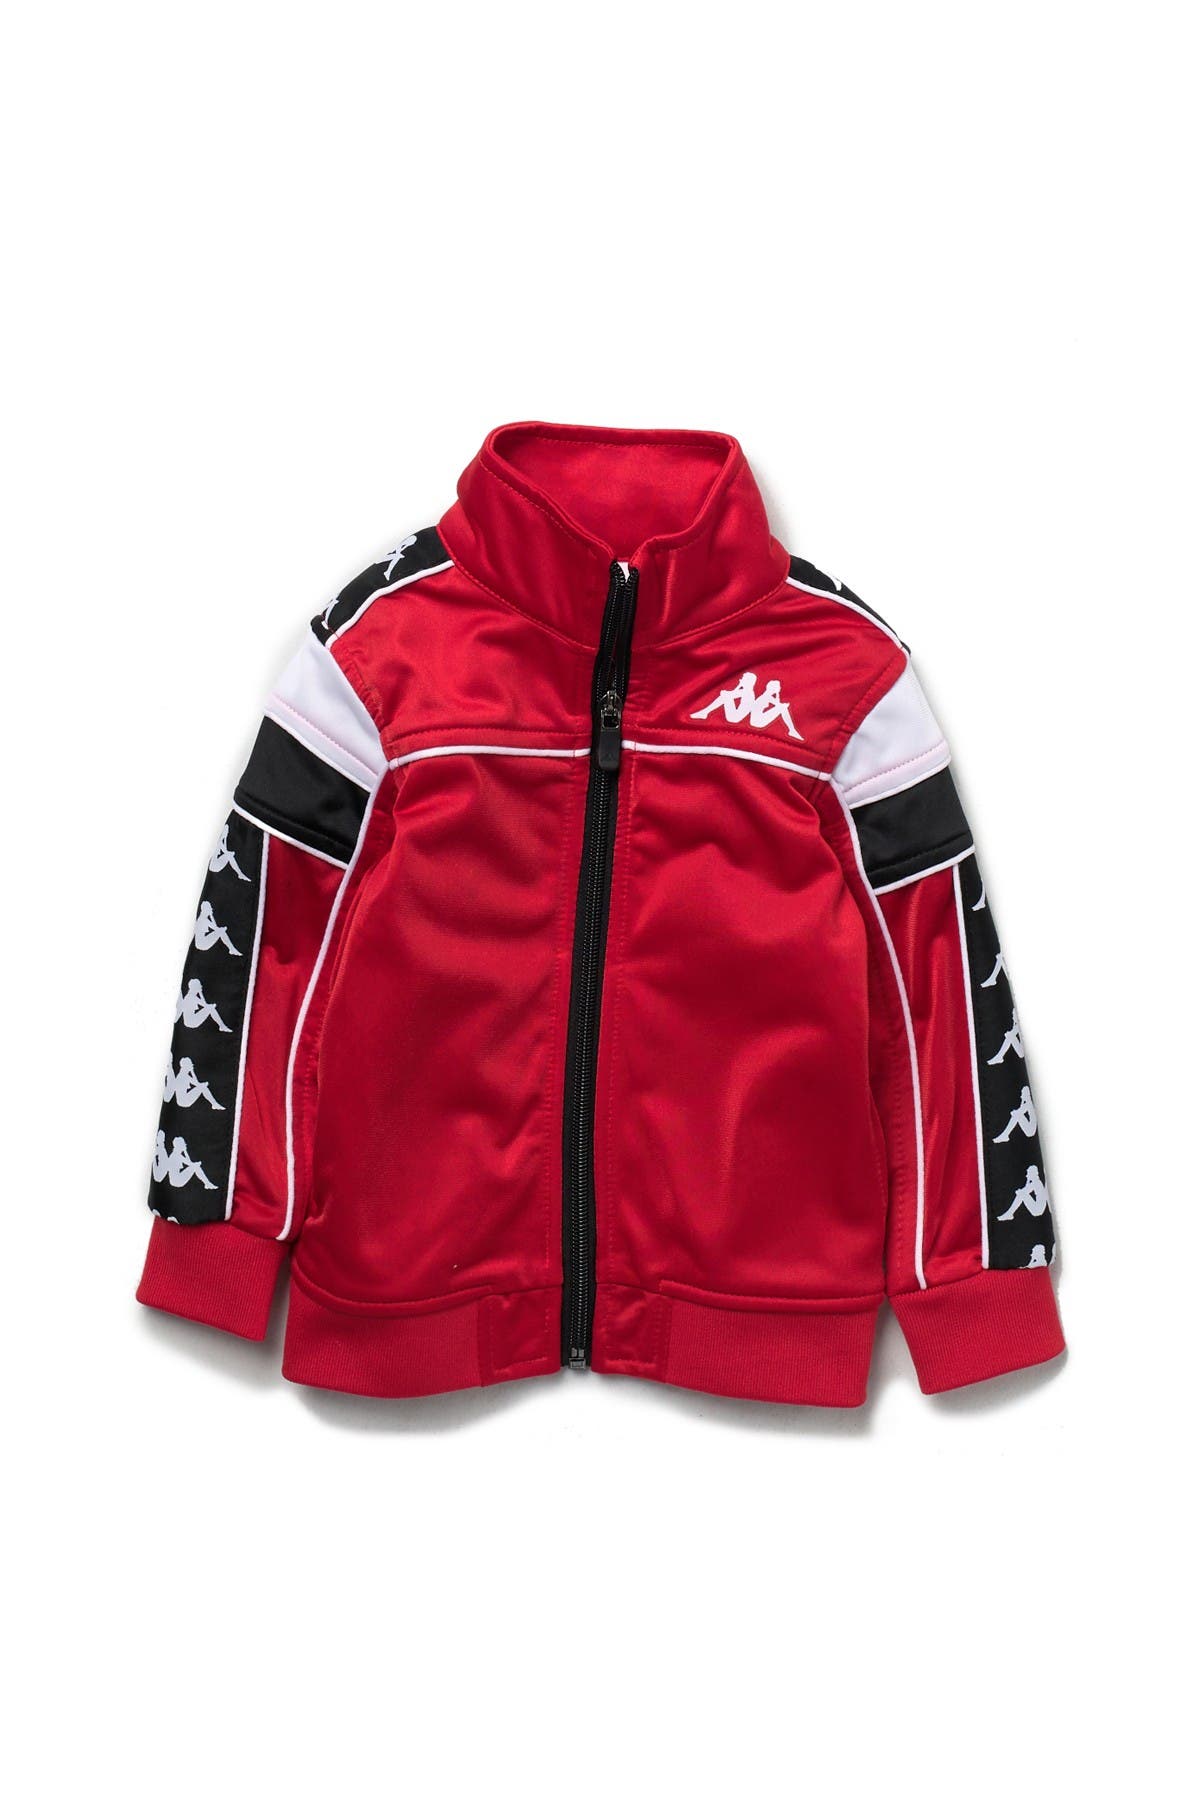 kappa red track jacket